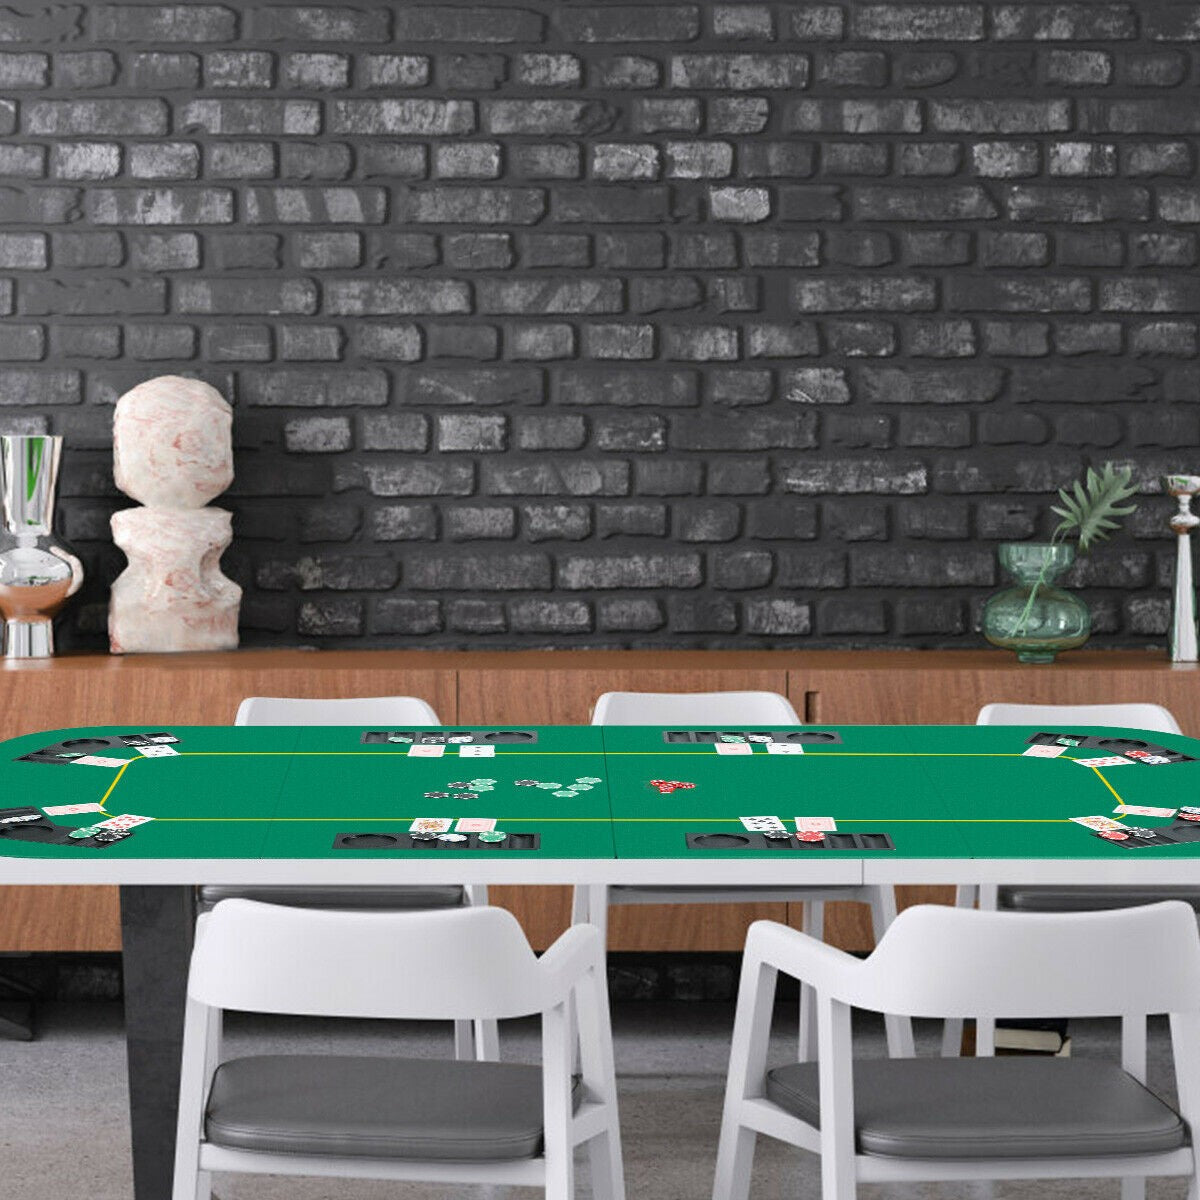 8 Player Poker Table Top, 80"x36" Folding Poker Table Top w/ Storage Bag (Green) - Giantexus